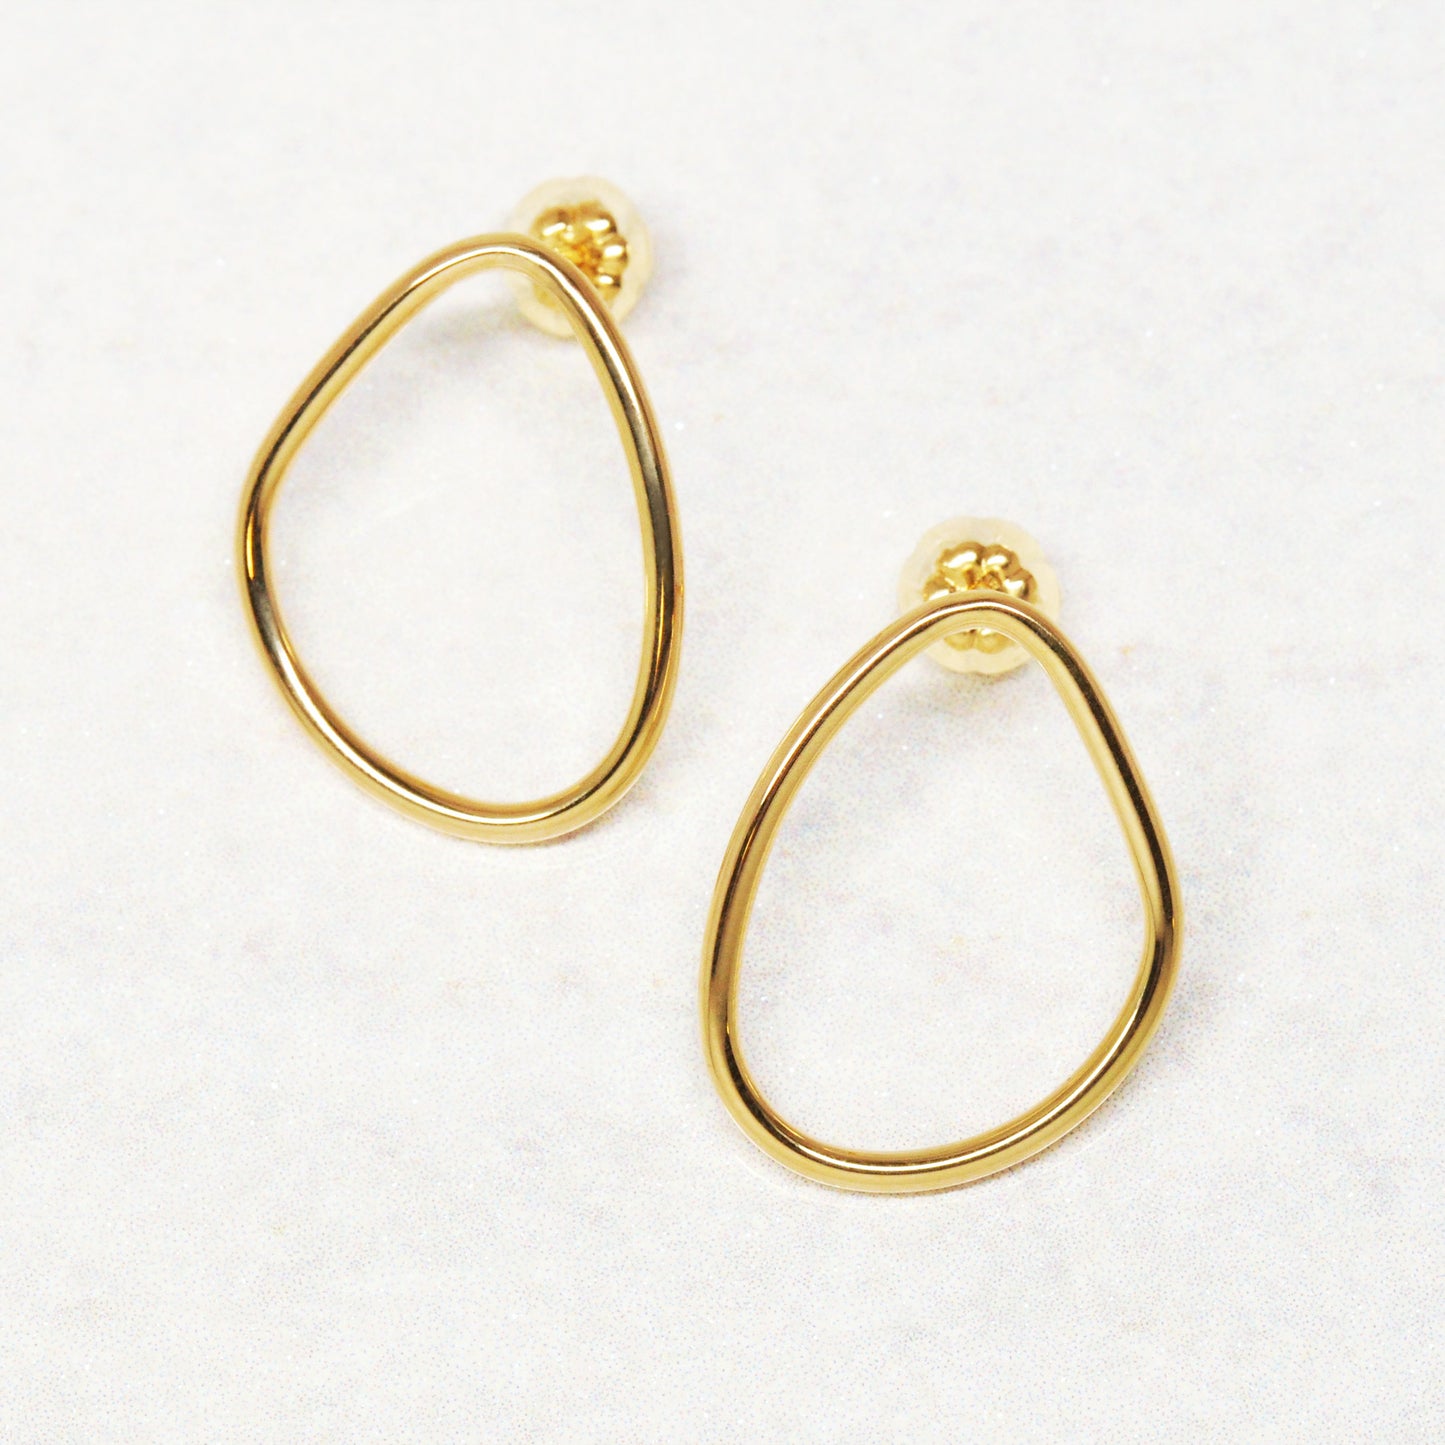 18K/10K Yellow Gold Organic Design Earrings - Product Image